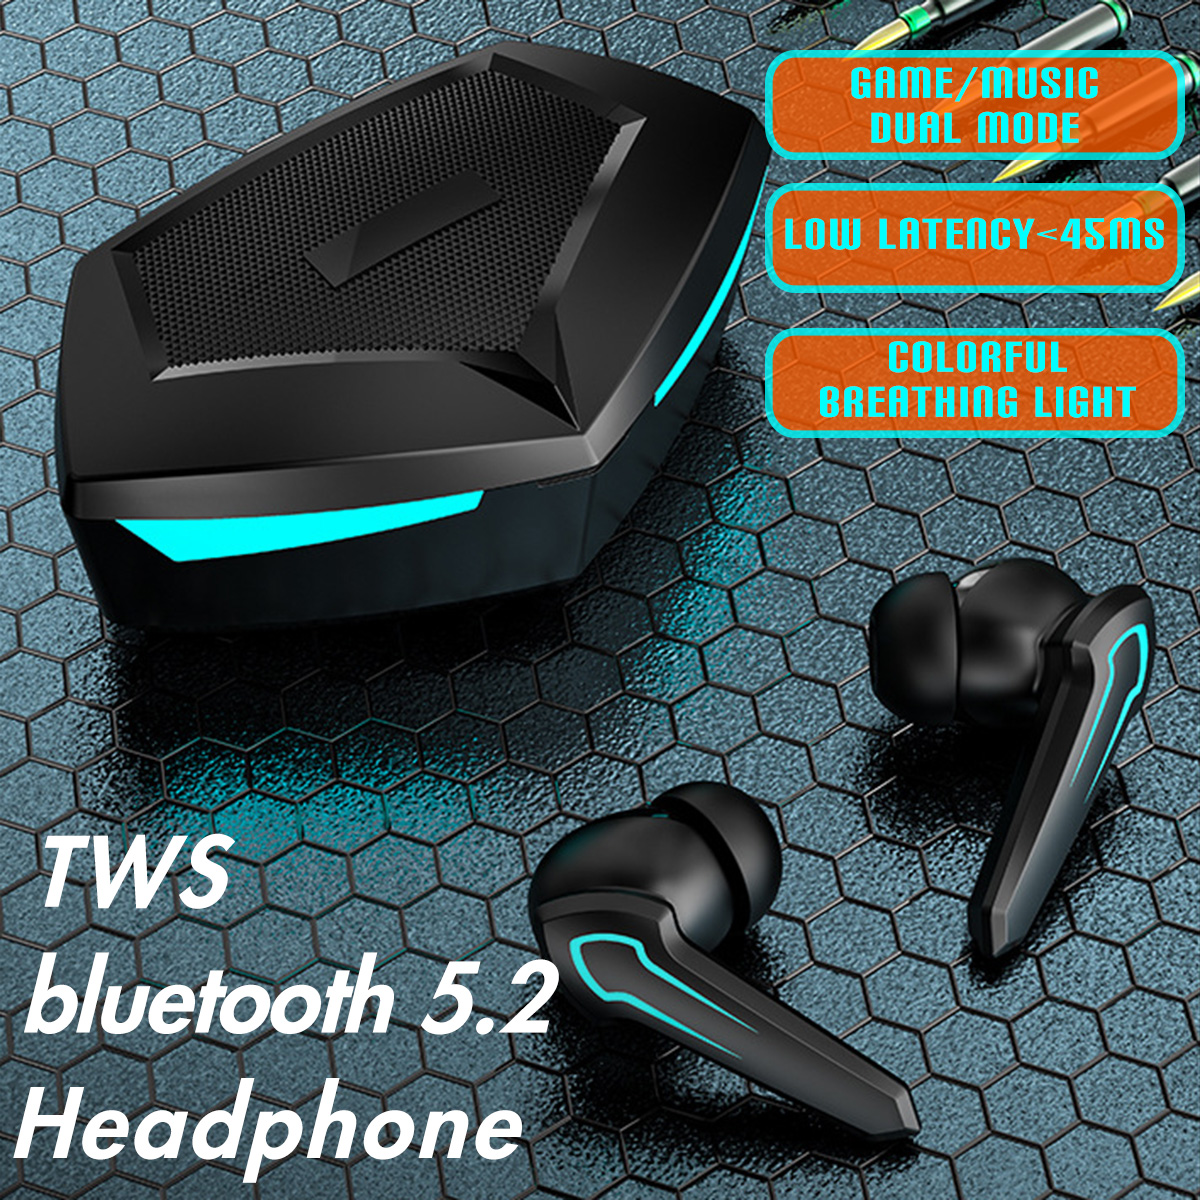 Bakeey-P30-TWS-bluetooth-Headset-BT50-Wireless-Game-Headphone-Long-Life-Breathing-lamp-Low-latency-E-1883322-8